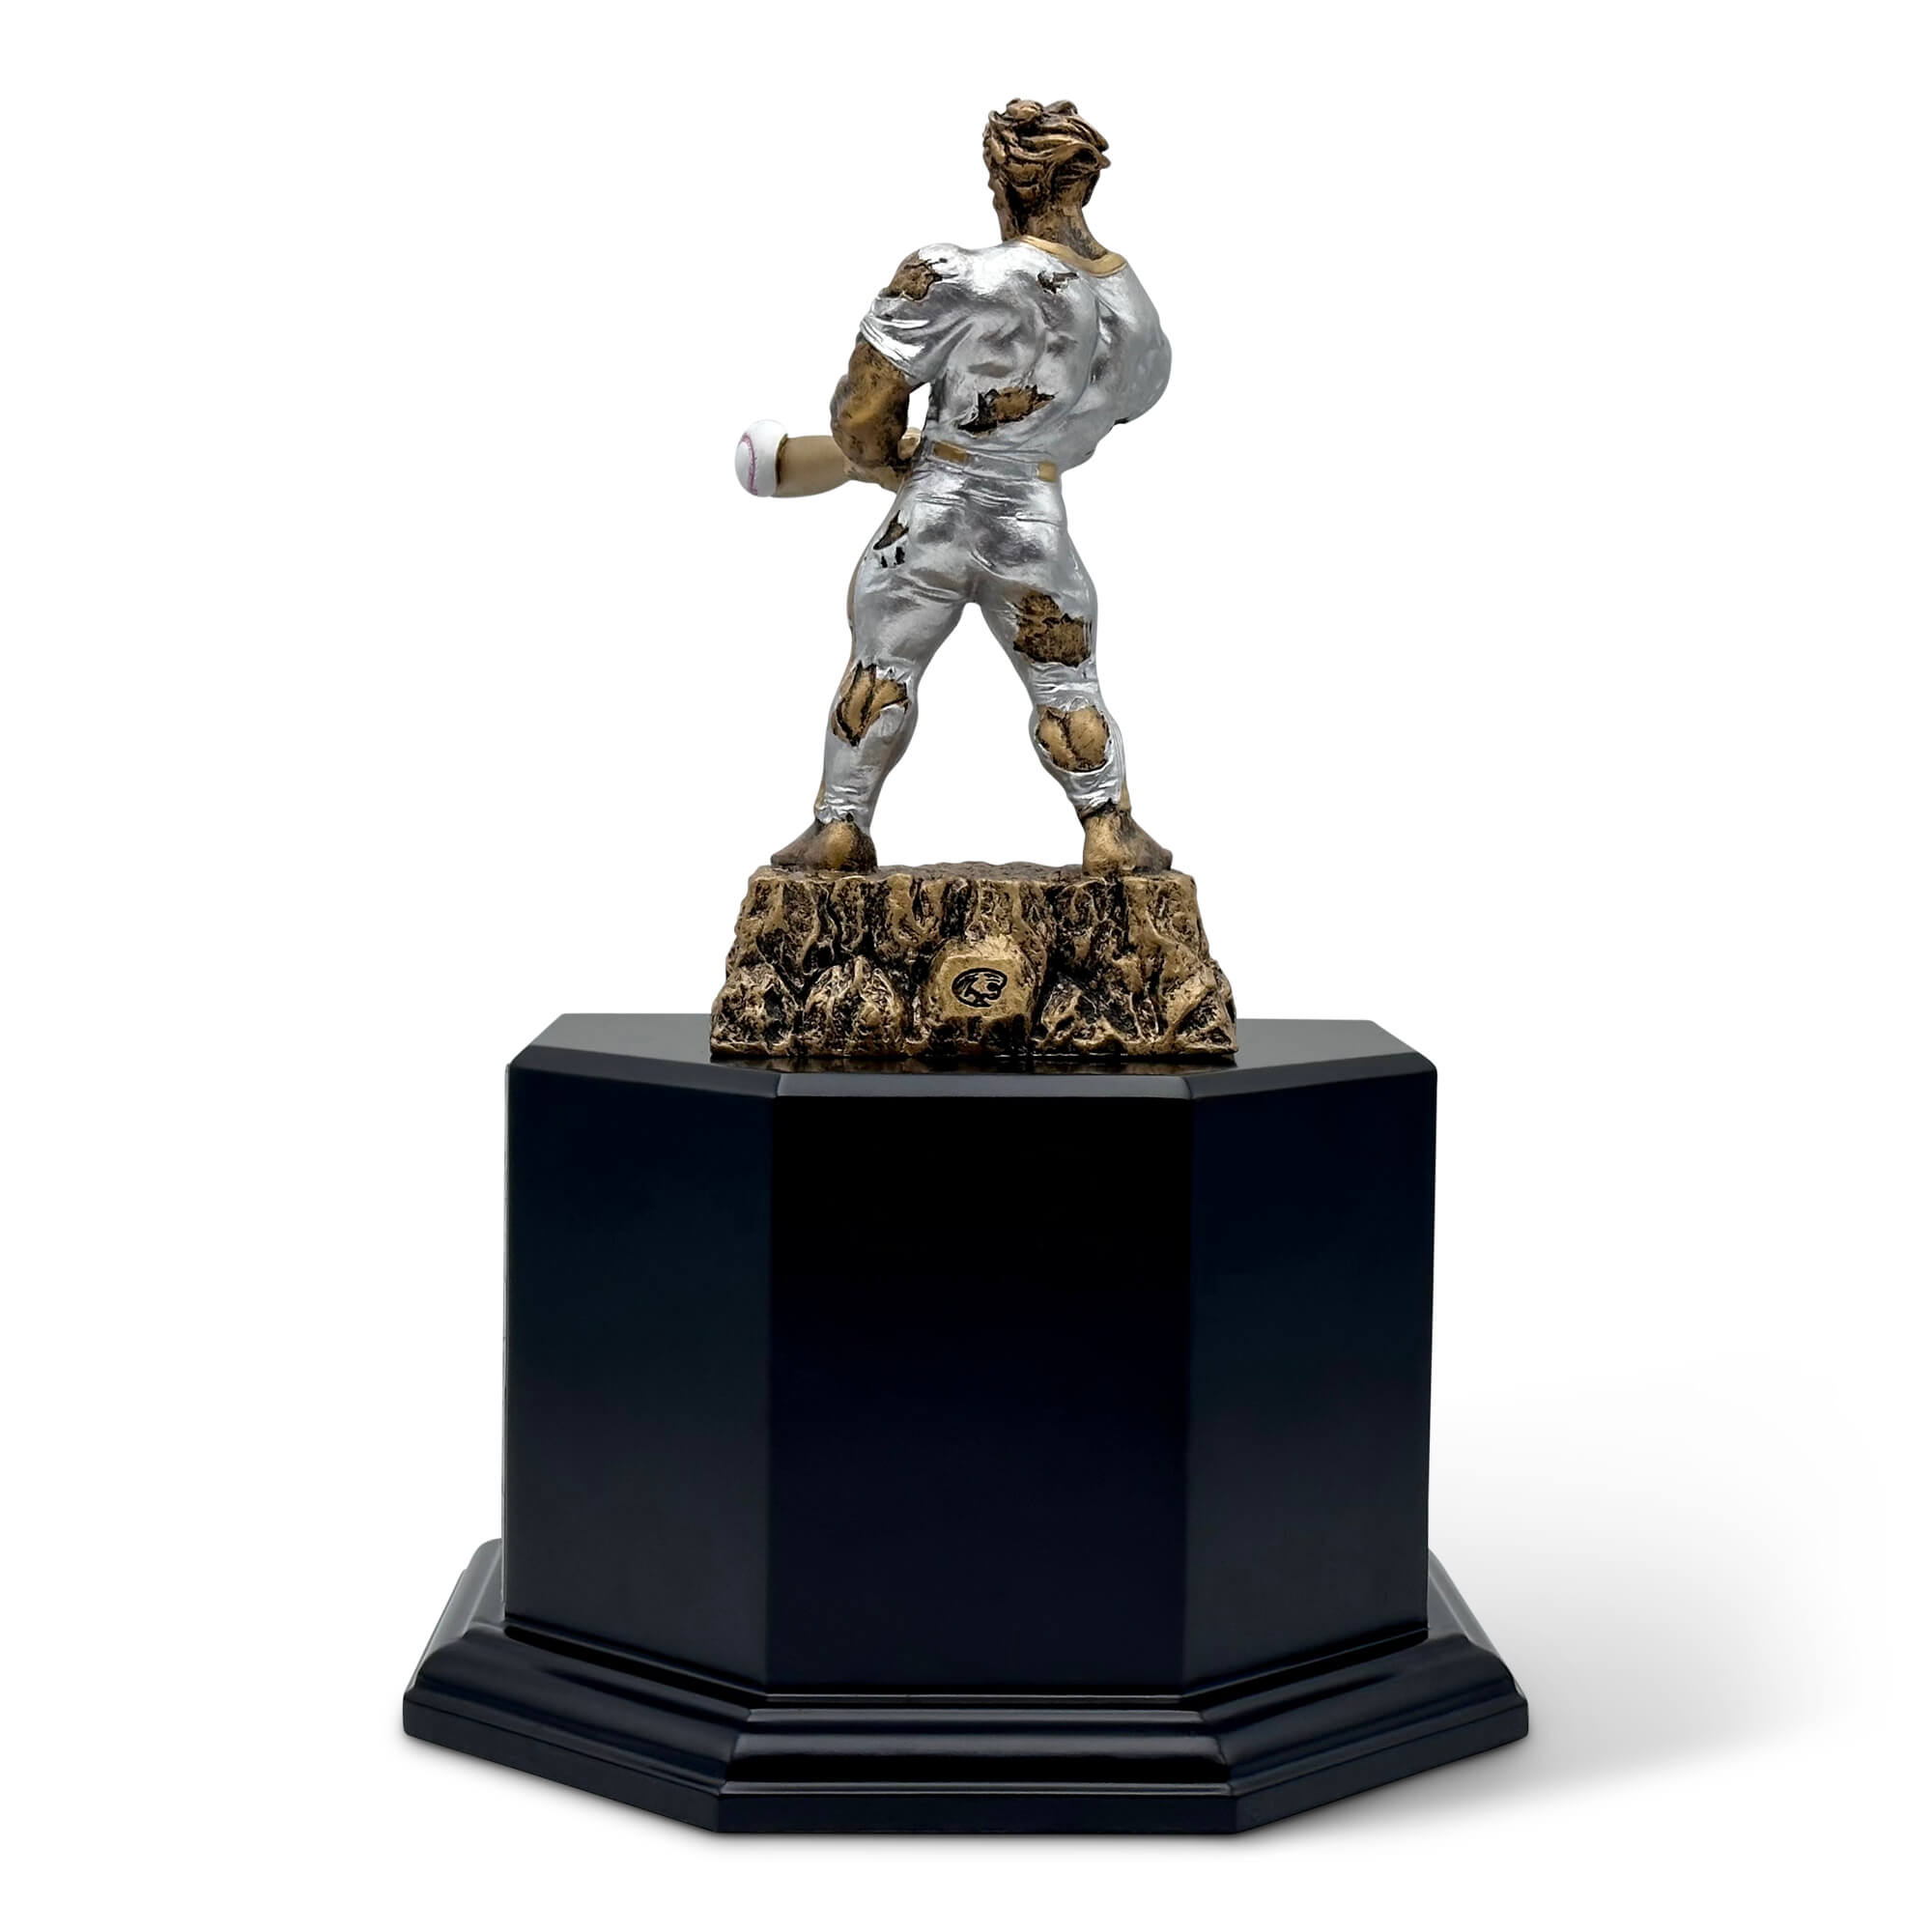 Fantasy Baseball Beast Trophy - 25 Year Perpetual